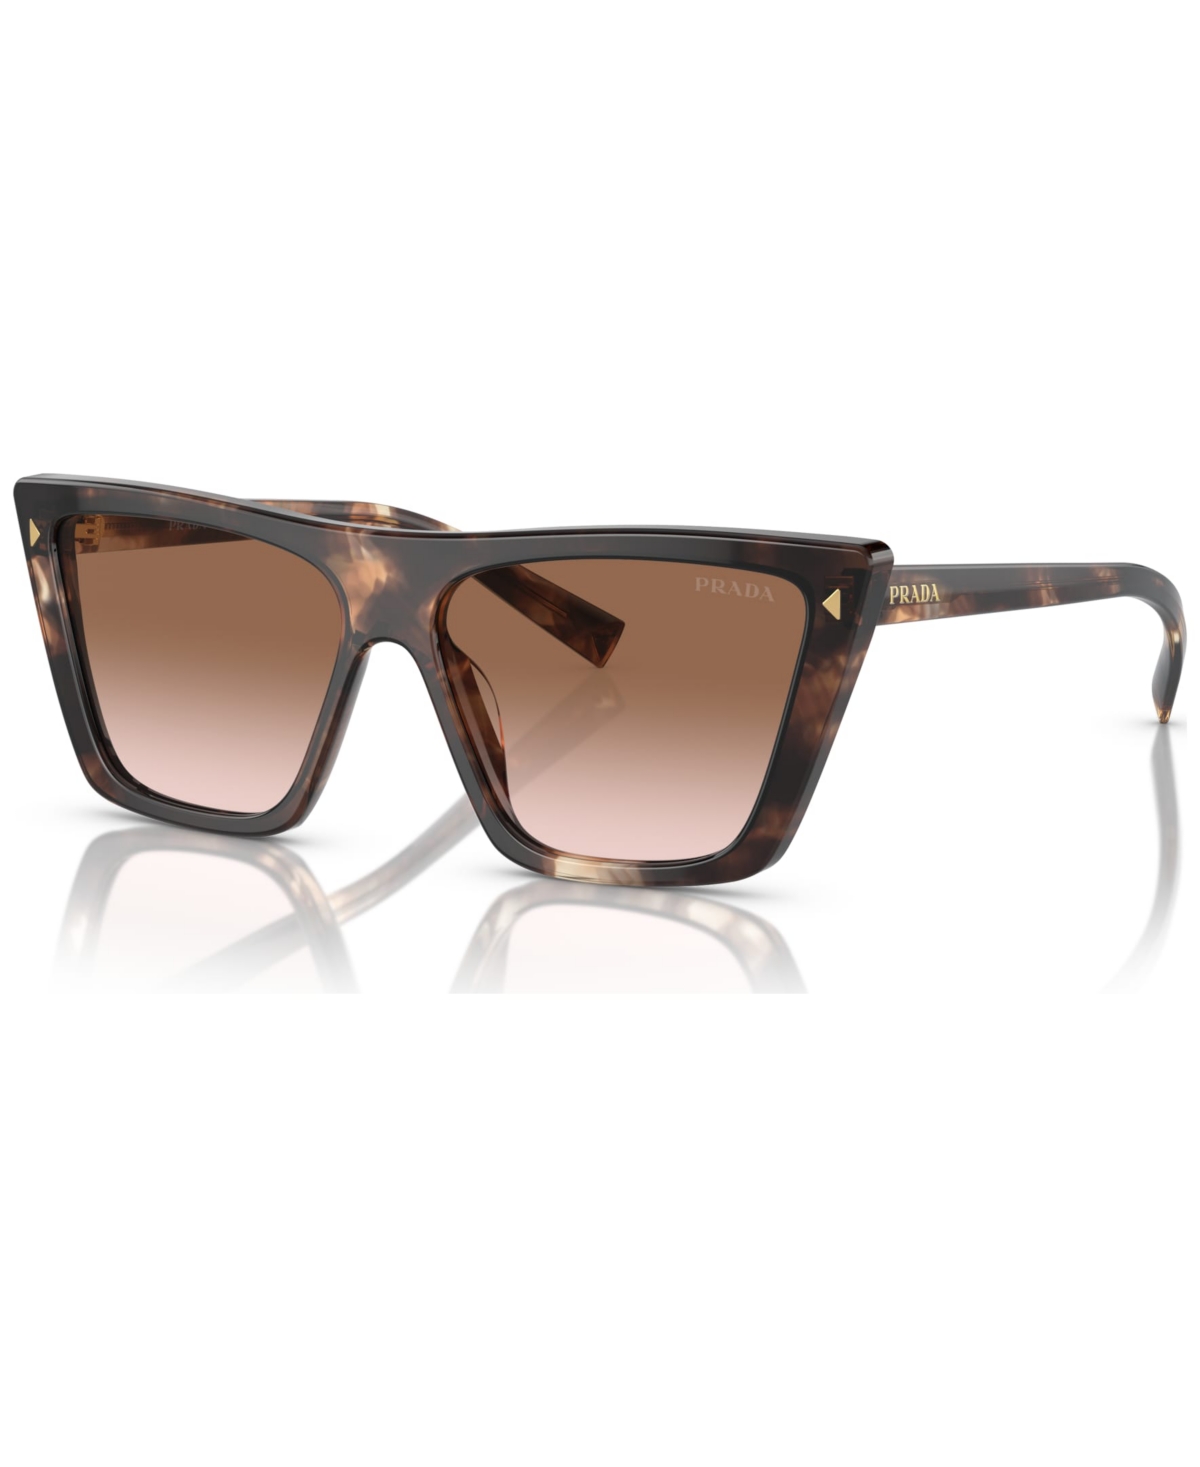 Prada Women's Sunglasses, Pr 21zs In Caramel Tortoise